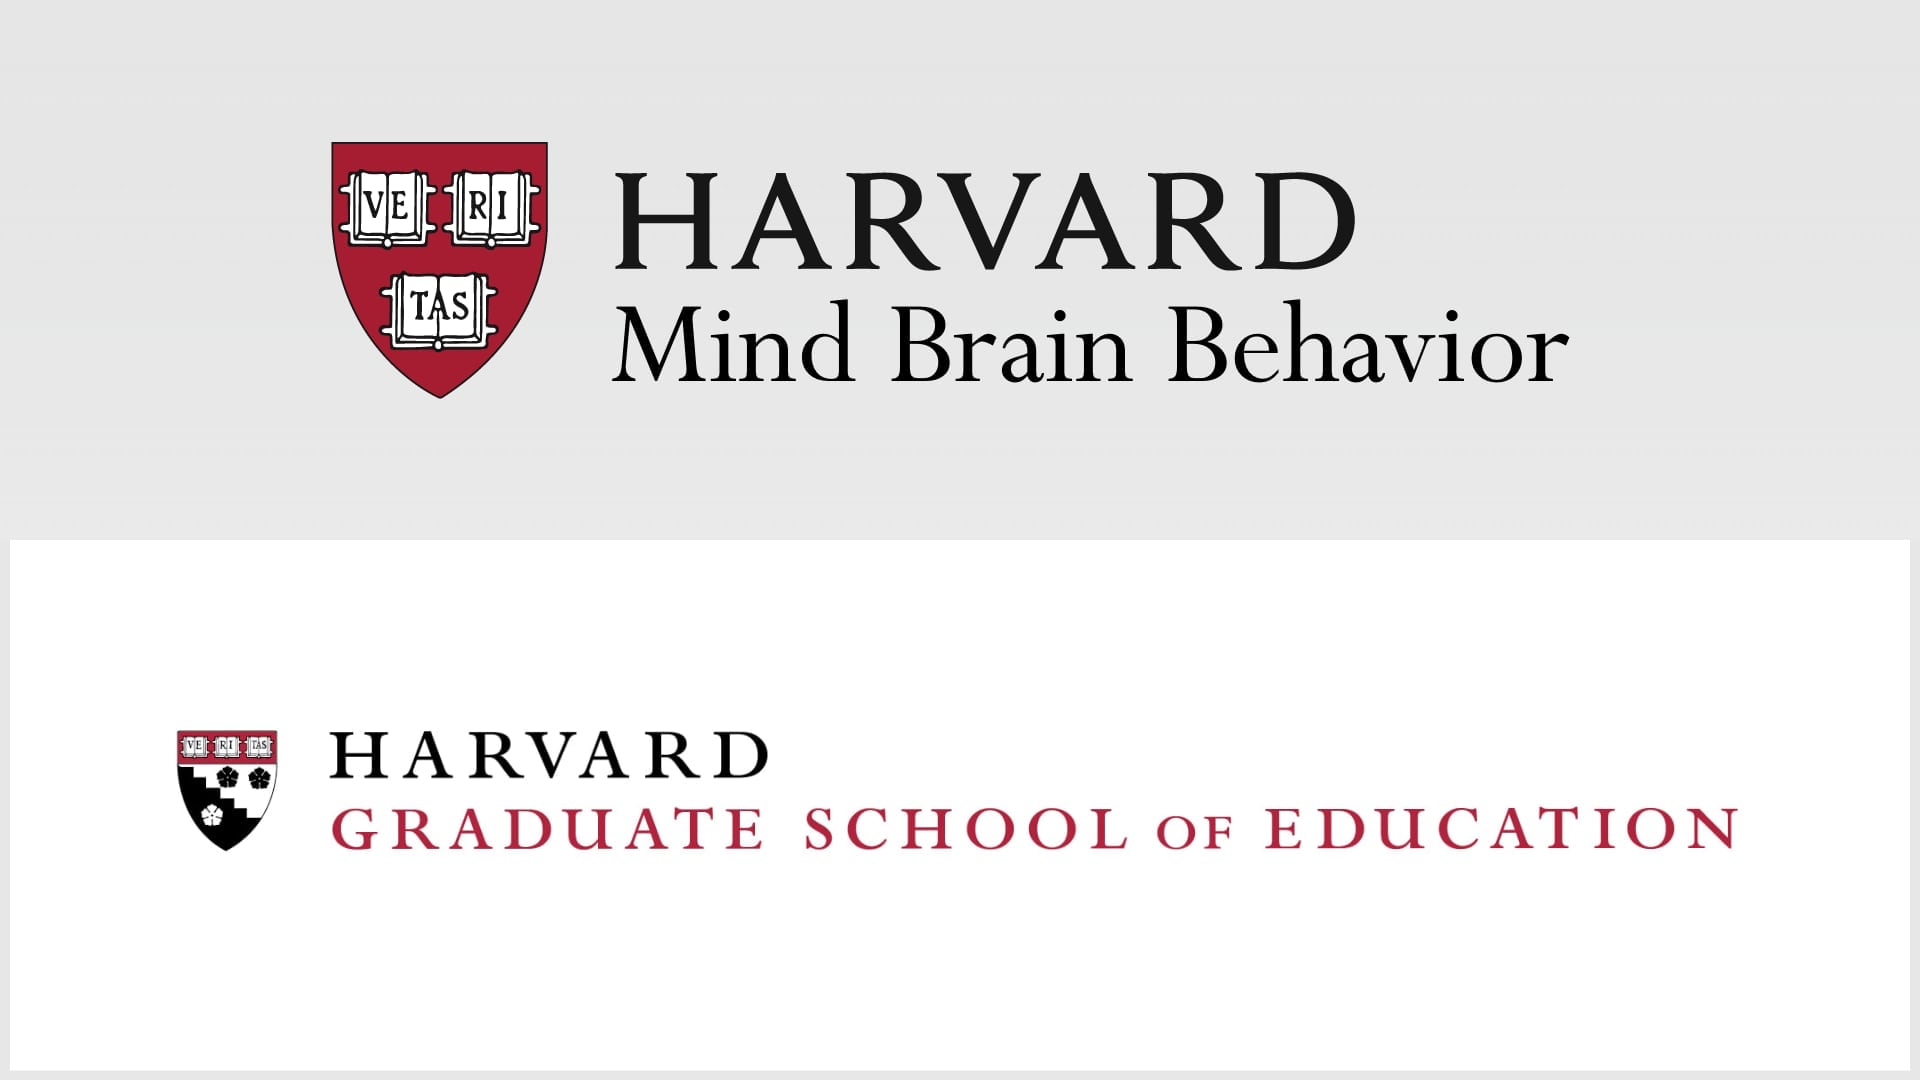 Harvard Mind Brain Behavior - Graduate School of Education